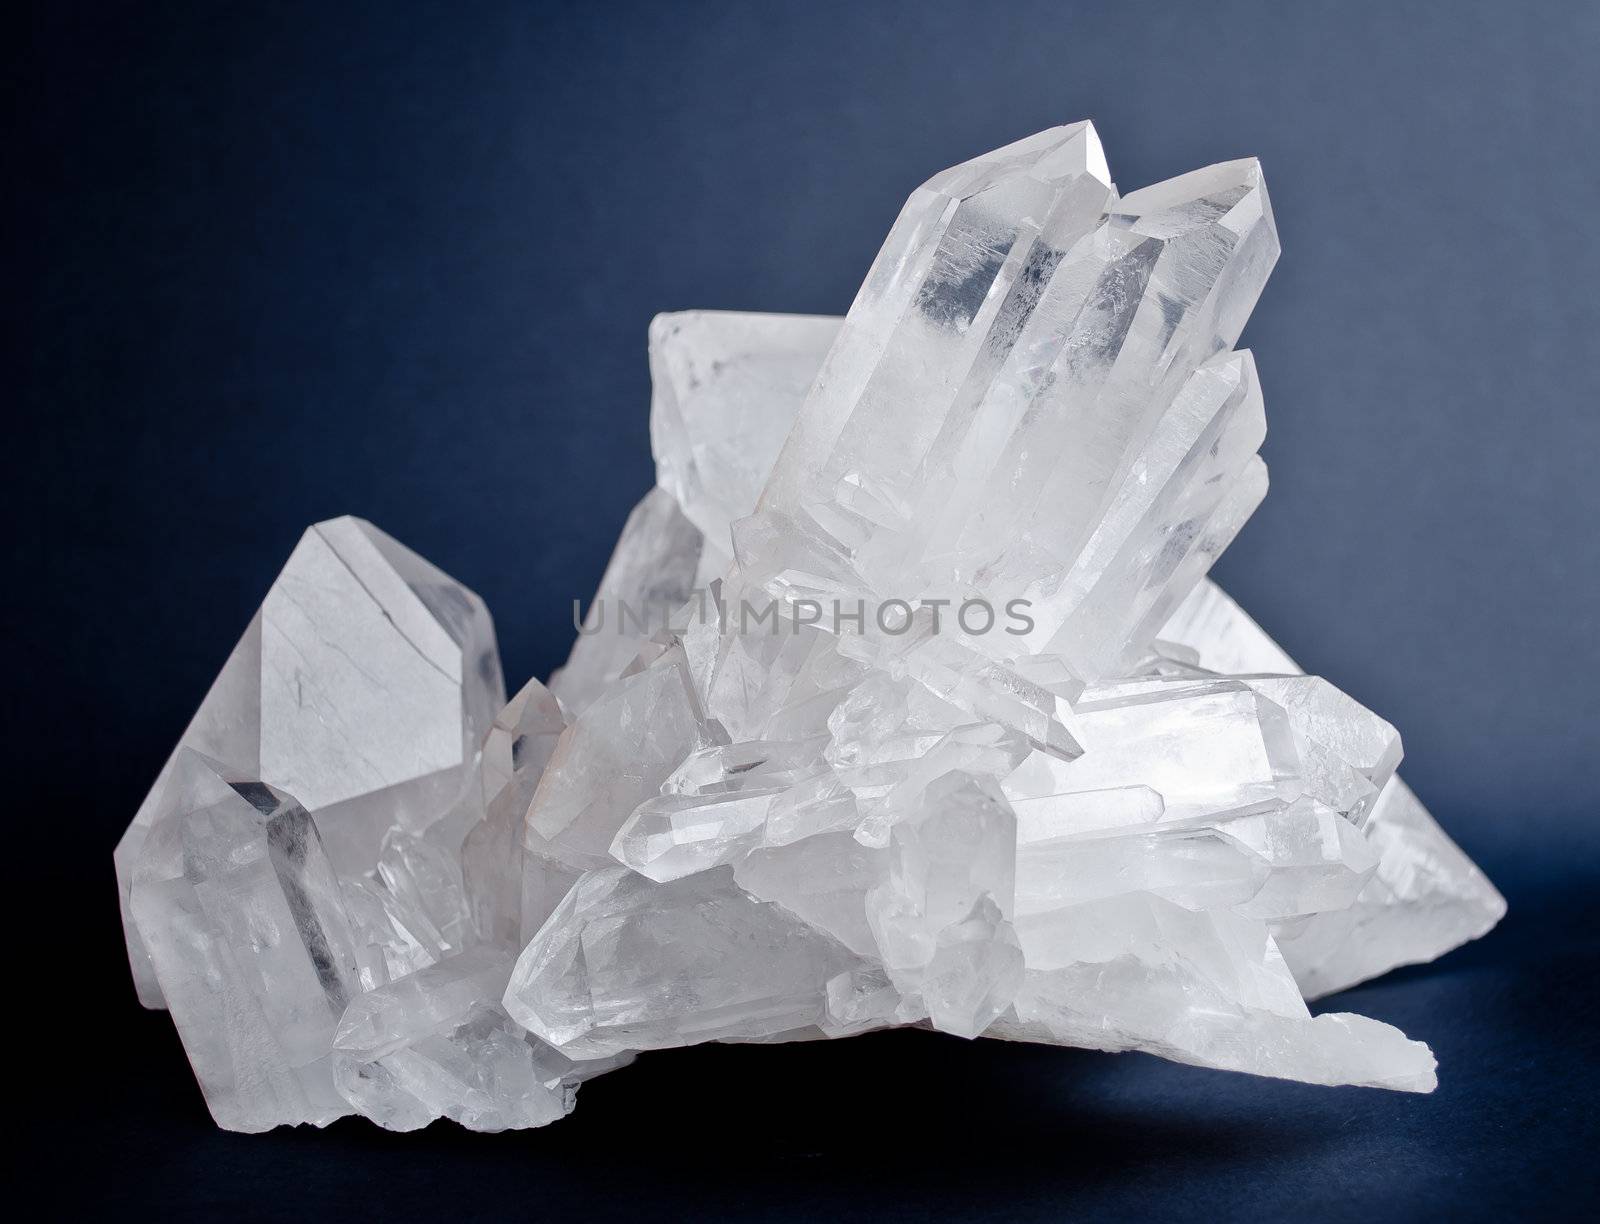 Big quartz crystals by artofphoto